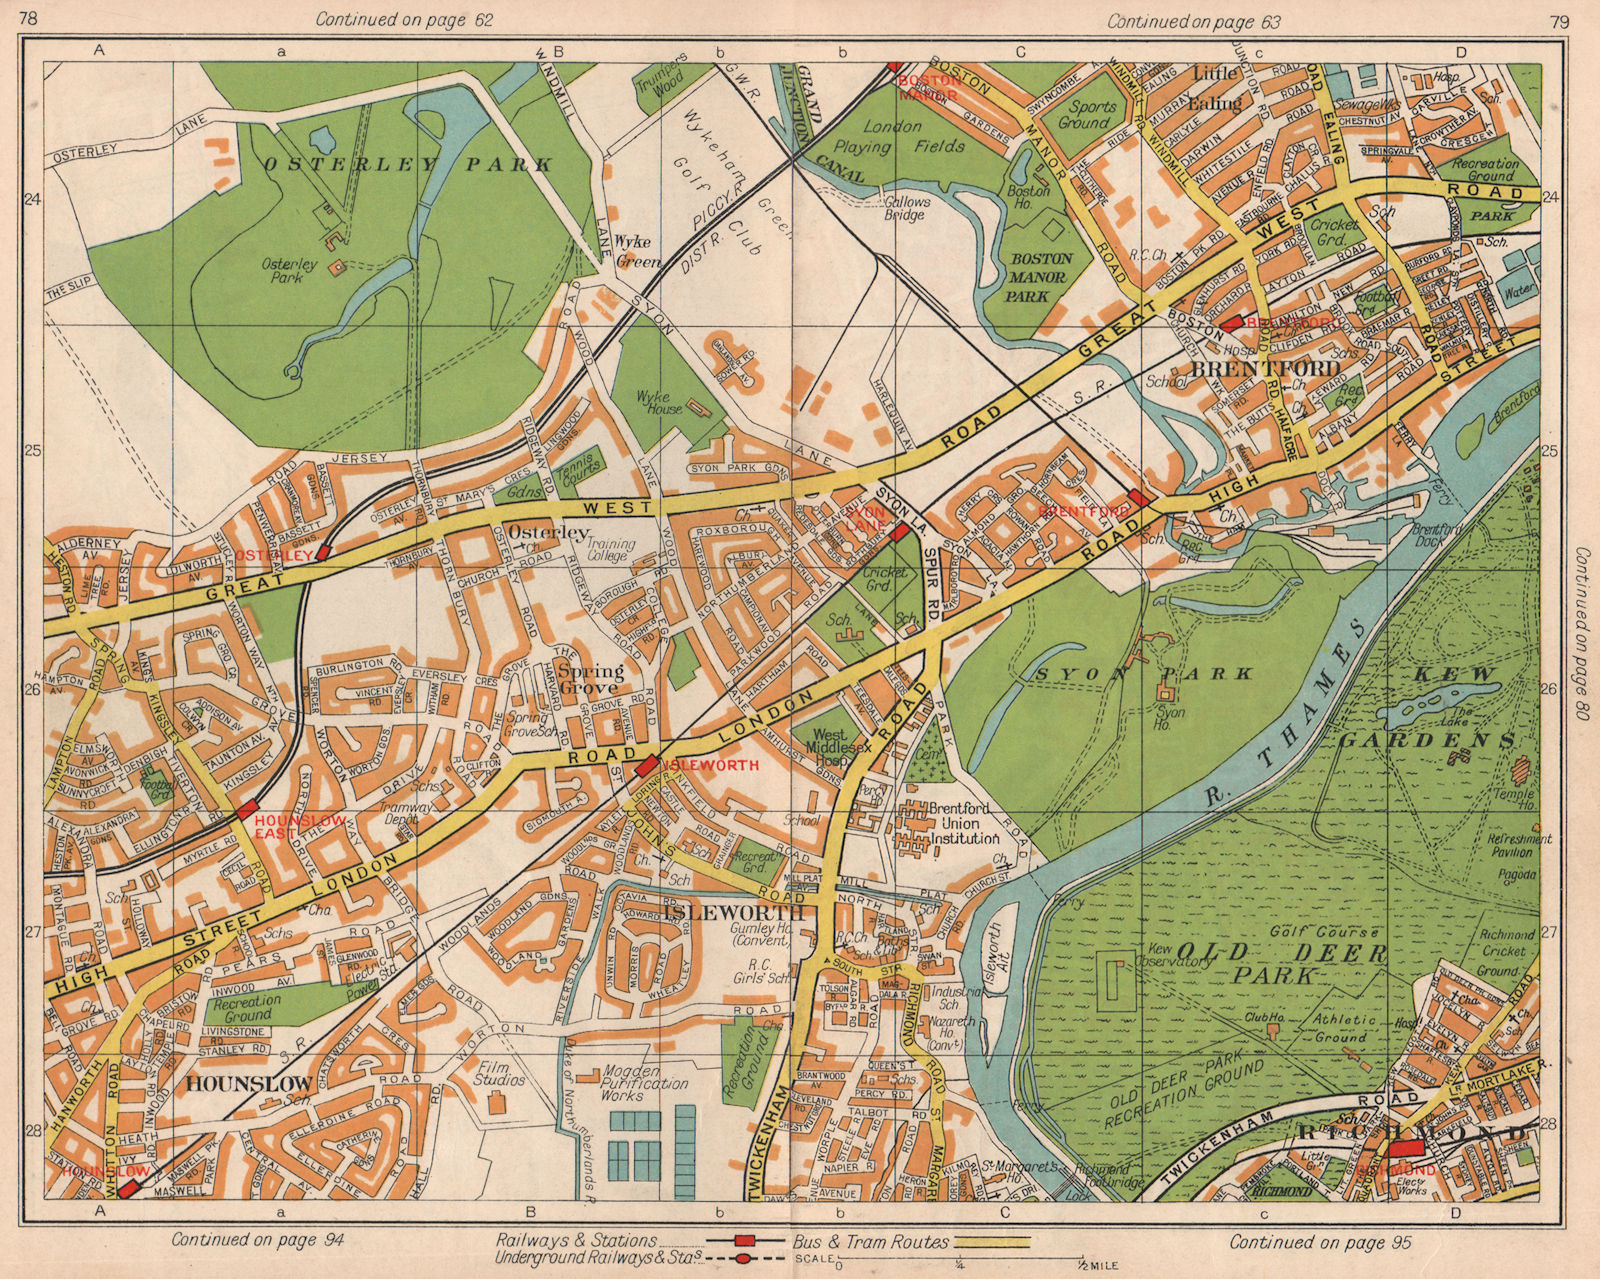 SW LONDON. Hounslow Isleworth Osterley Brentford Richmond Osterley 1938 map